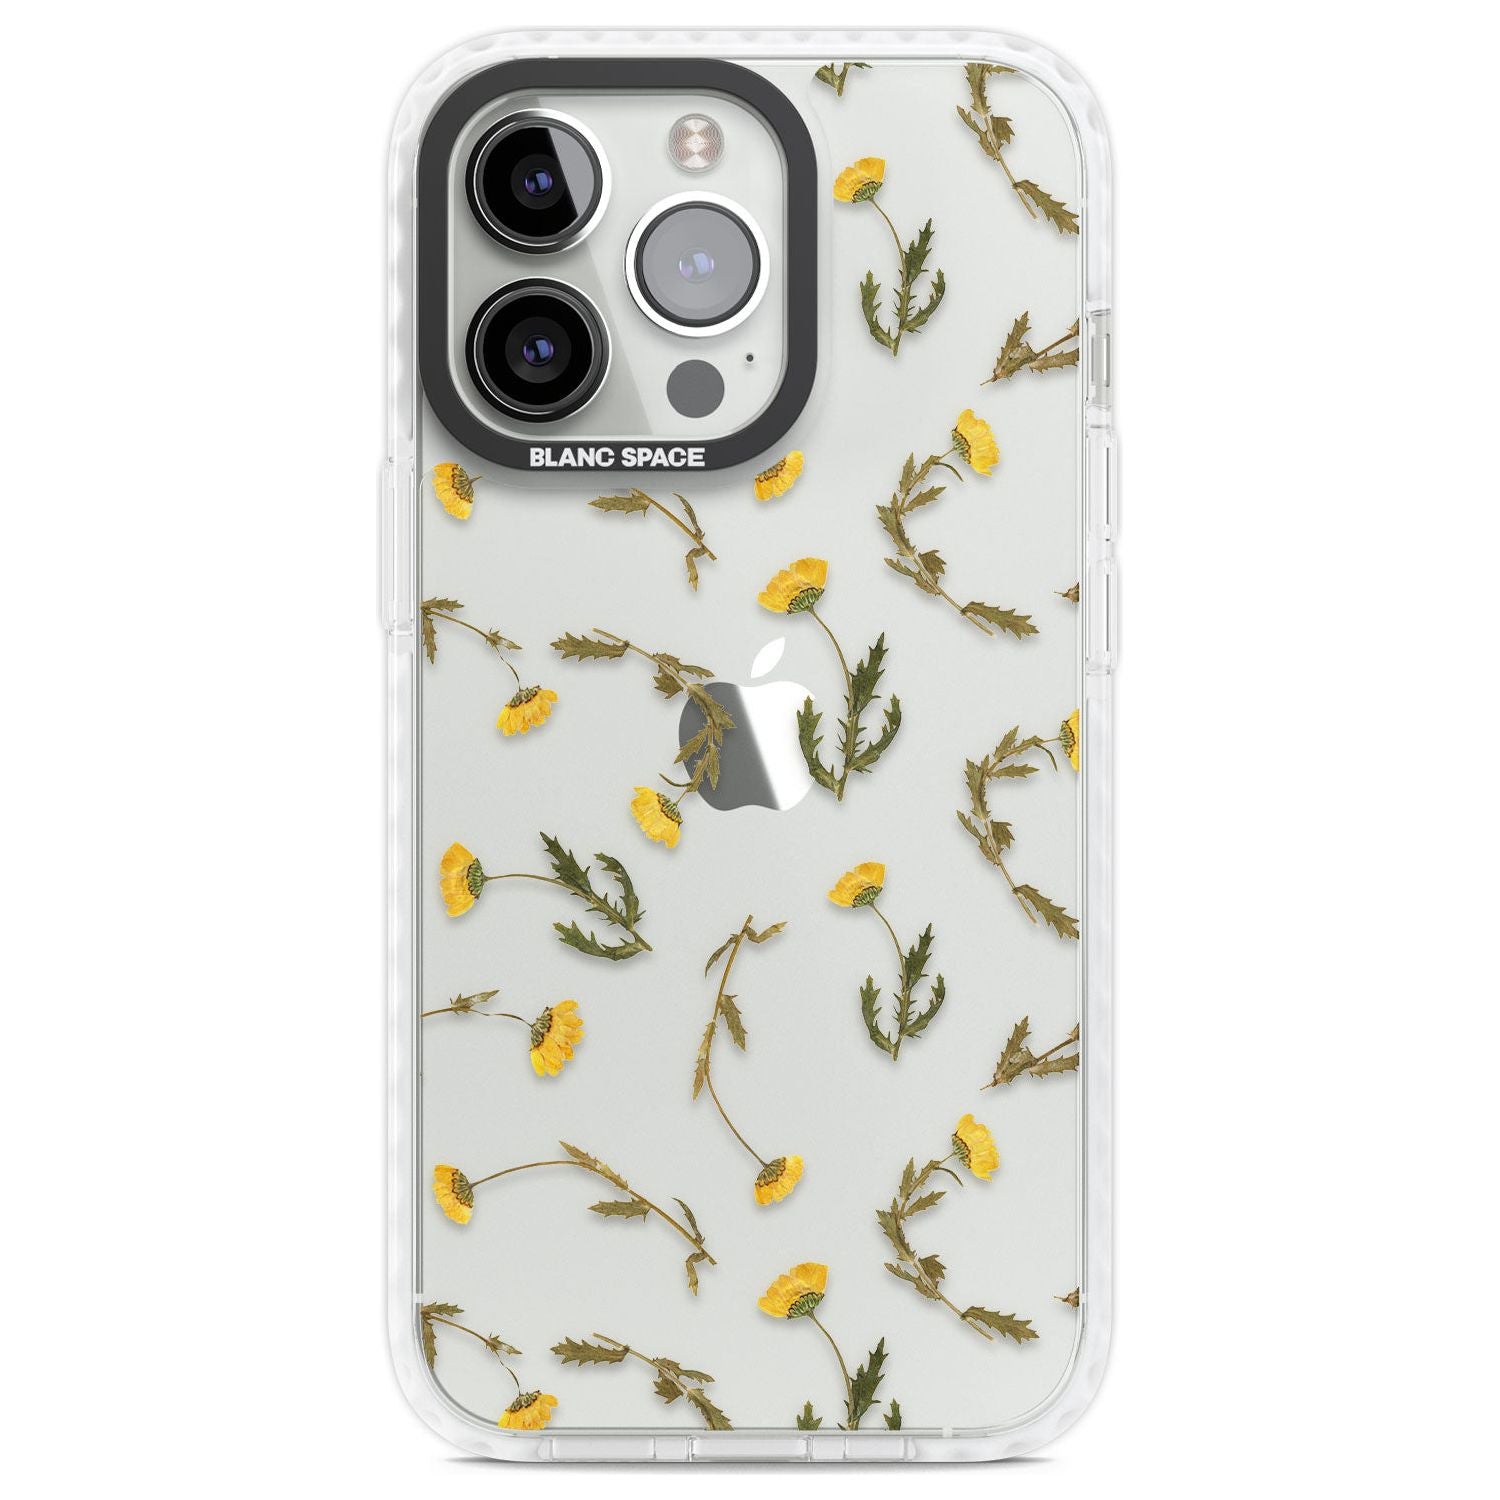 Long Stemmed Wildflowers - Dried Flower-Inspired Phone Case iPhone 13 Pro / Impact Case,iPhone 14 Pro / Impact Case,iPhone 15 Pro Max / Impact Case,iPhone 15 Pro / Impact Case Blanc Space